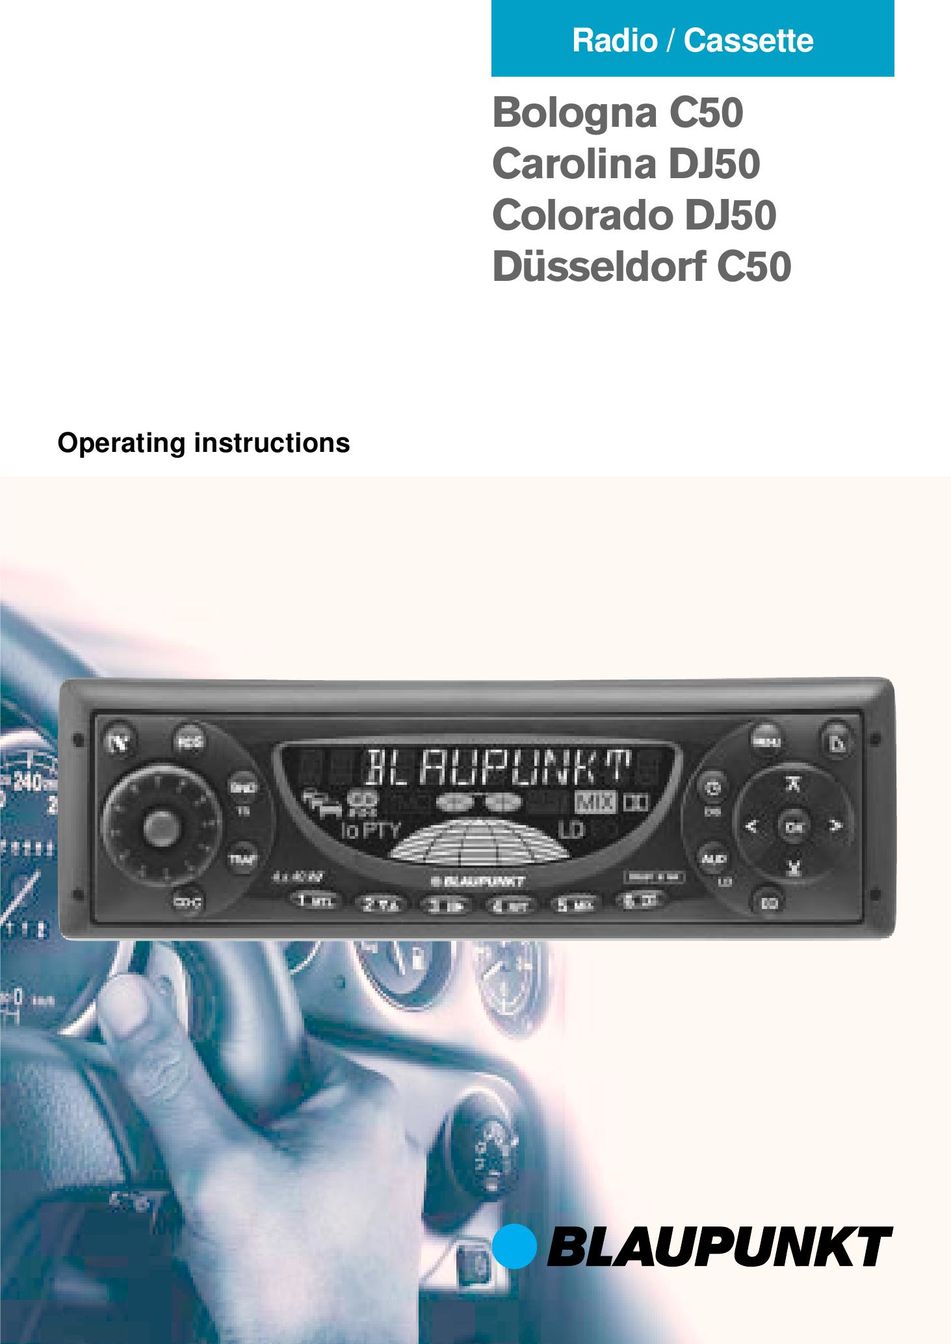 Blaupunkt Bologna C50 Car Stereo System User Manual